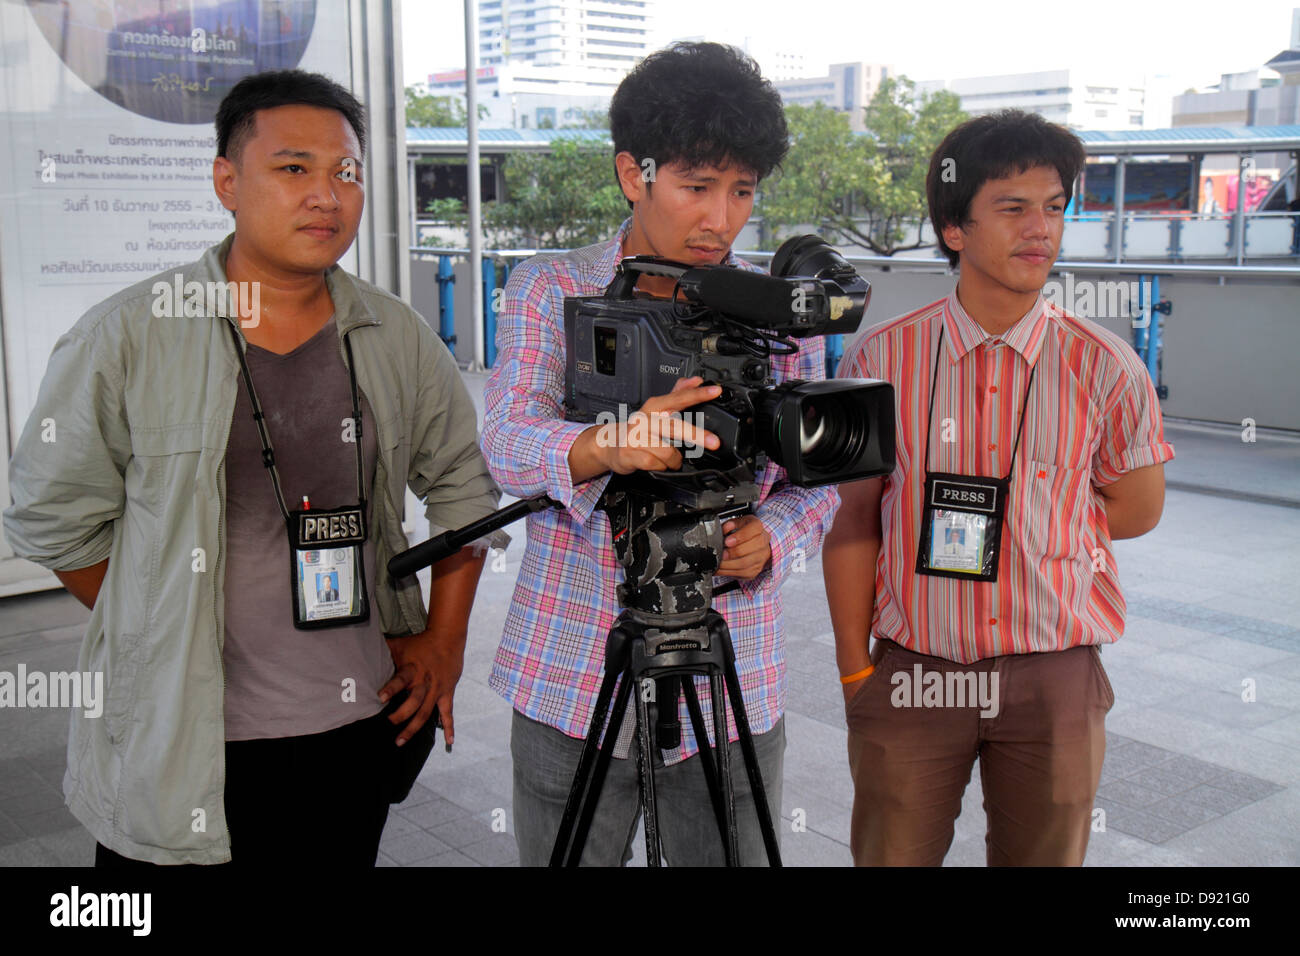 Bangkok Thailand, Thai, Pathum Wan, Rama 1 Road, Skywalk, Asiaten Ethnische Immigranten Minderheit, Erwachsene Erwachsene Erwachsene Mann Männer männlich, Presse, Kameramann, schießen Stockfoto